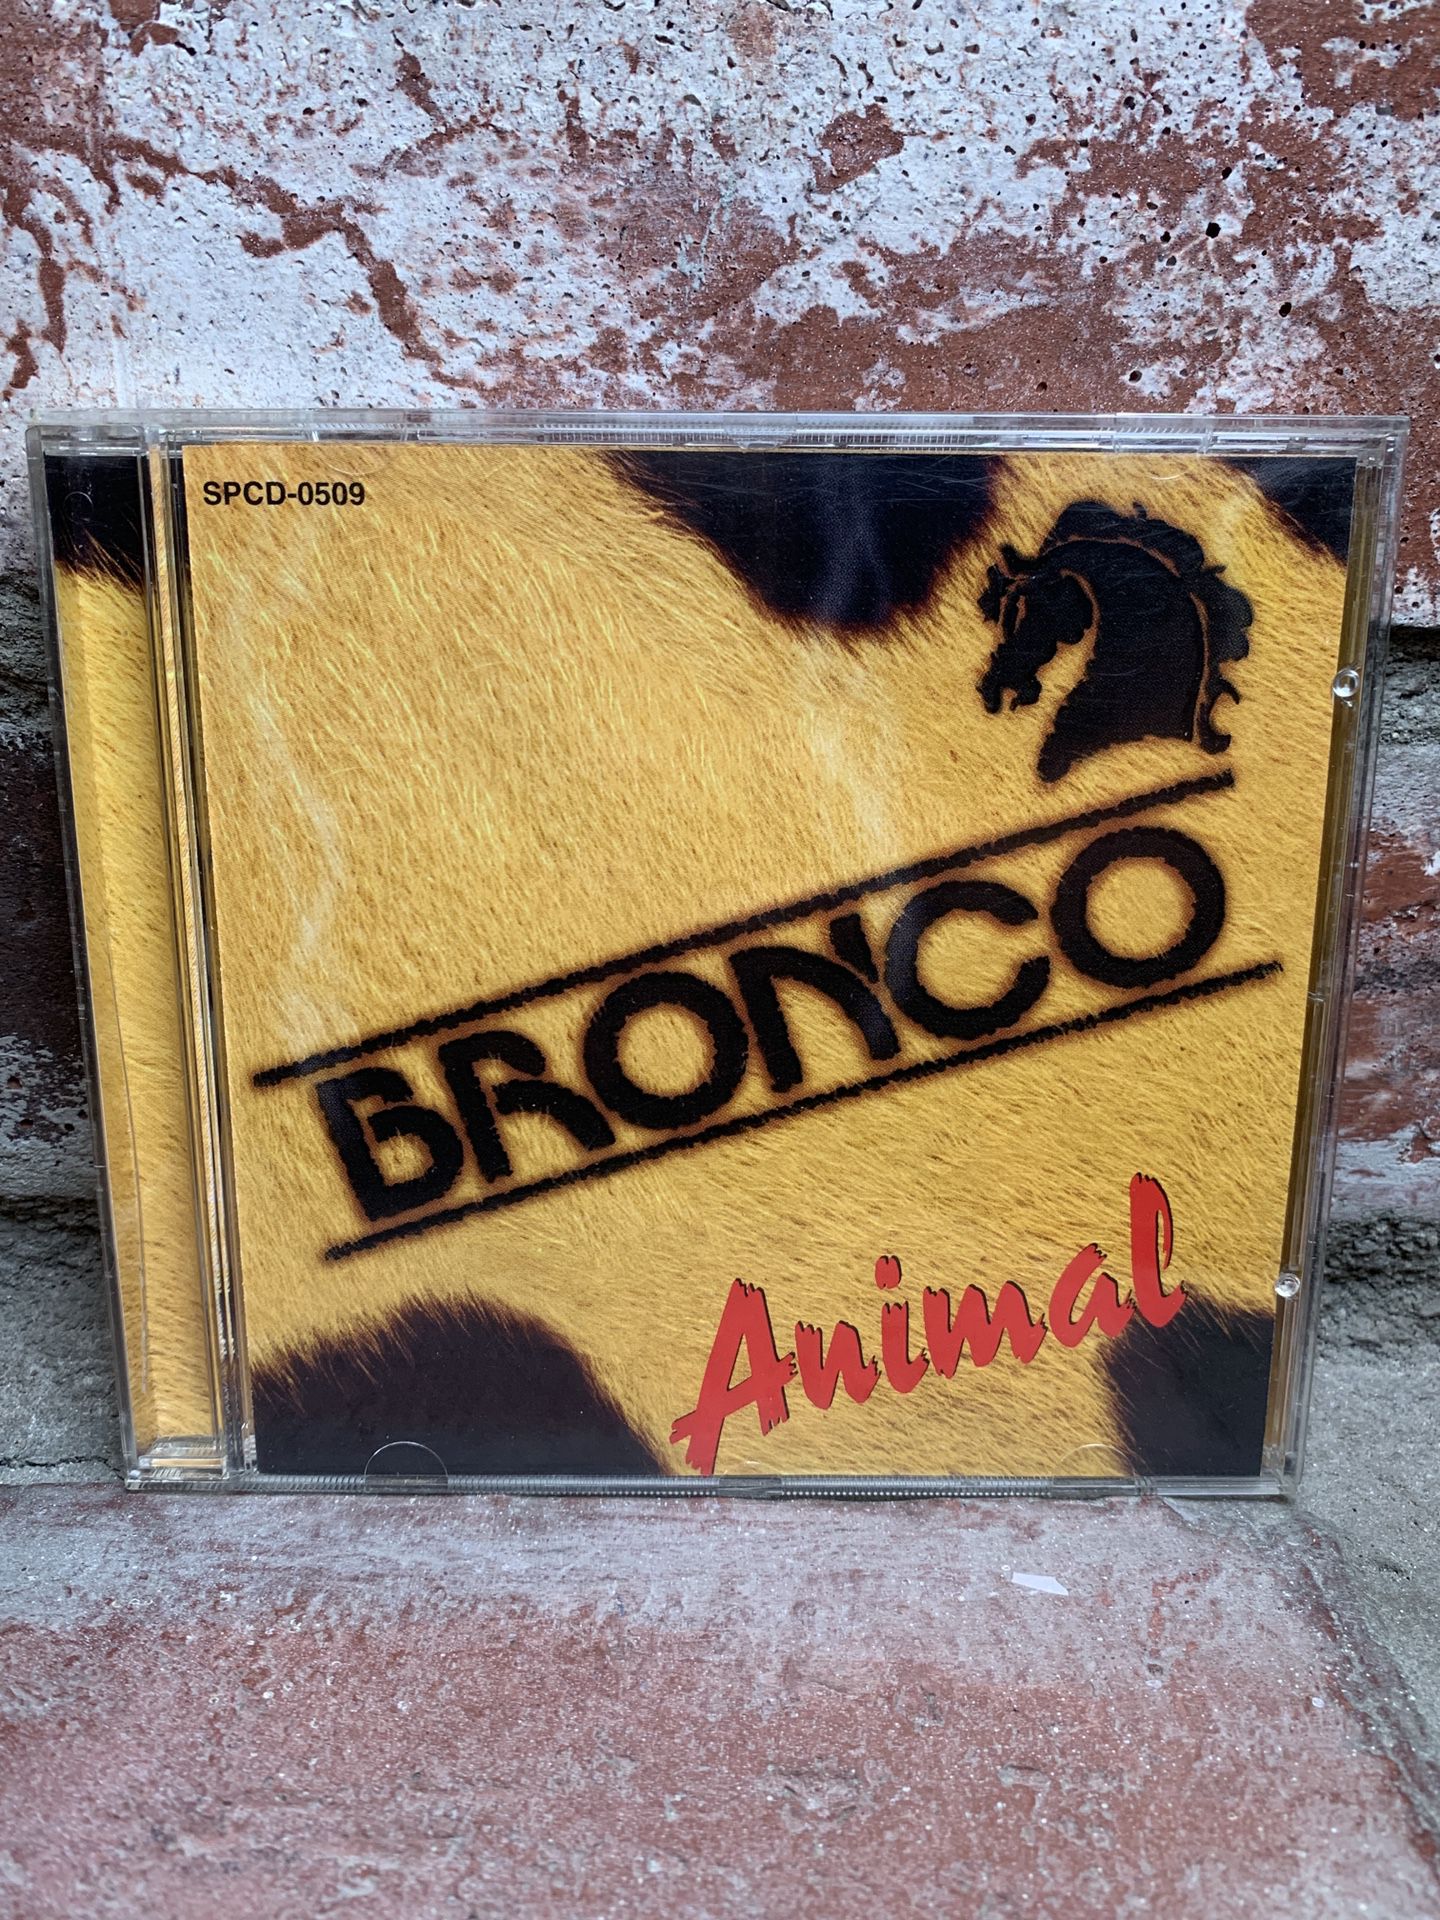 Bronco Animal CD 1995 Fonovisa